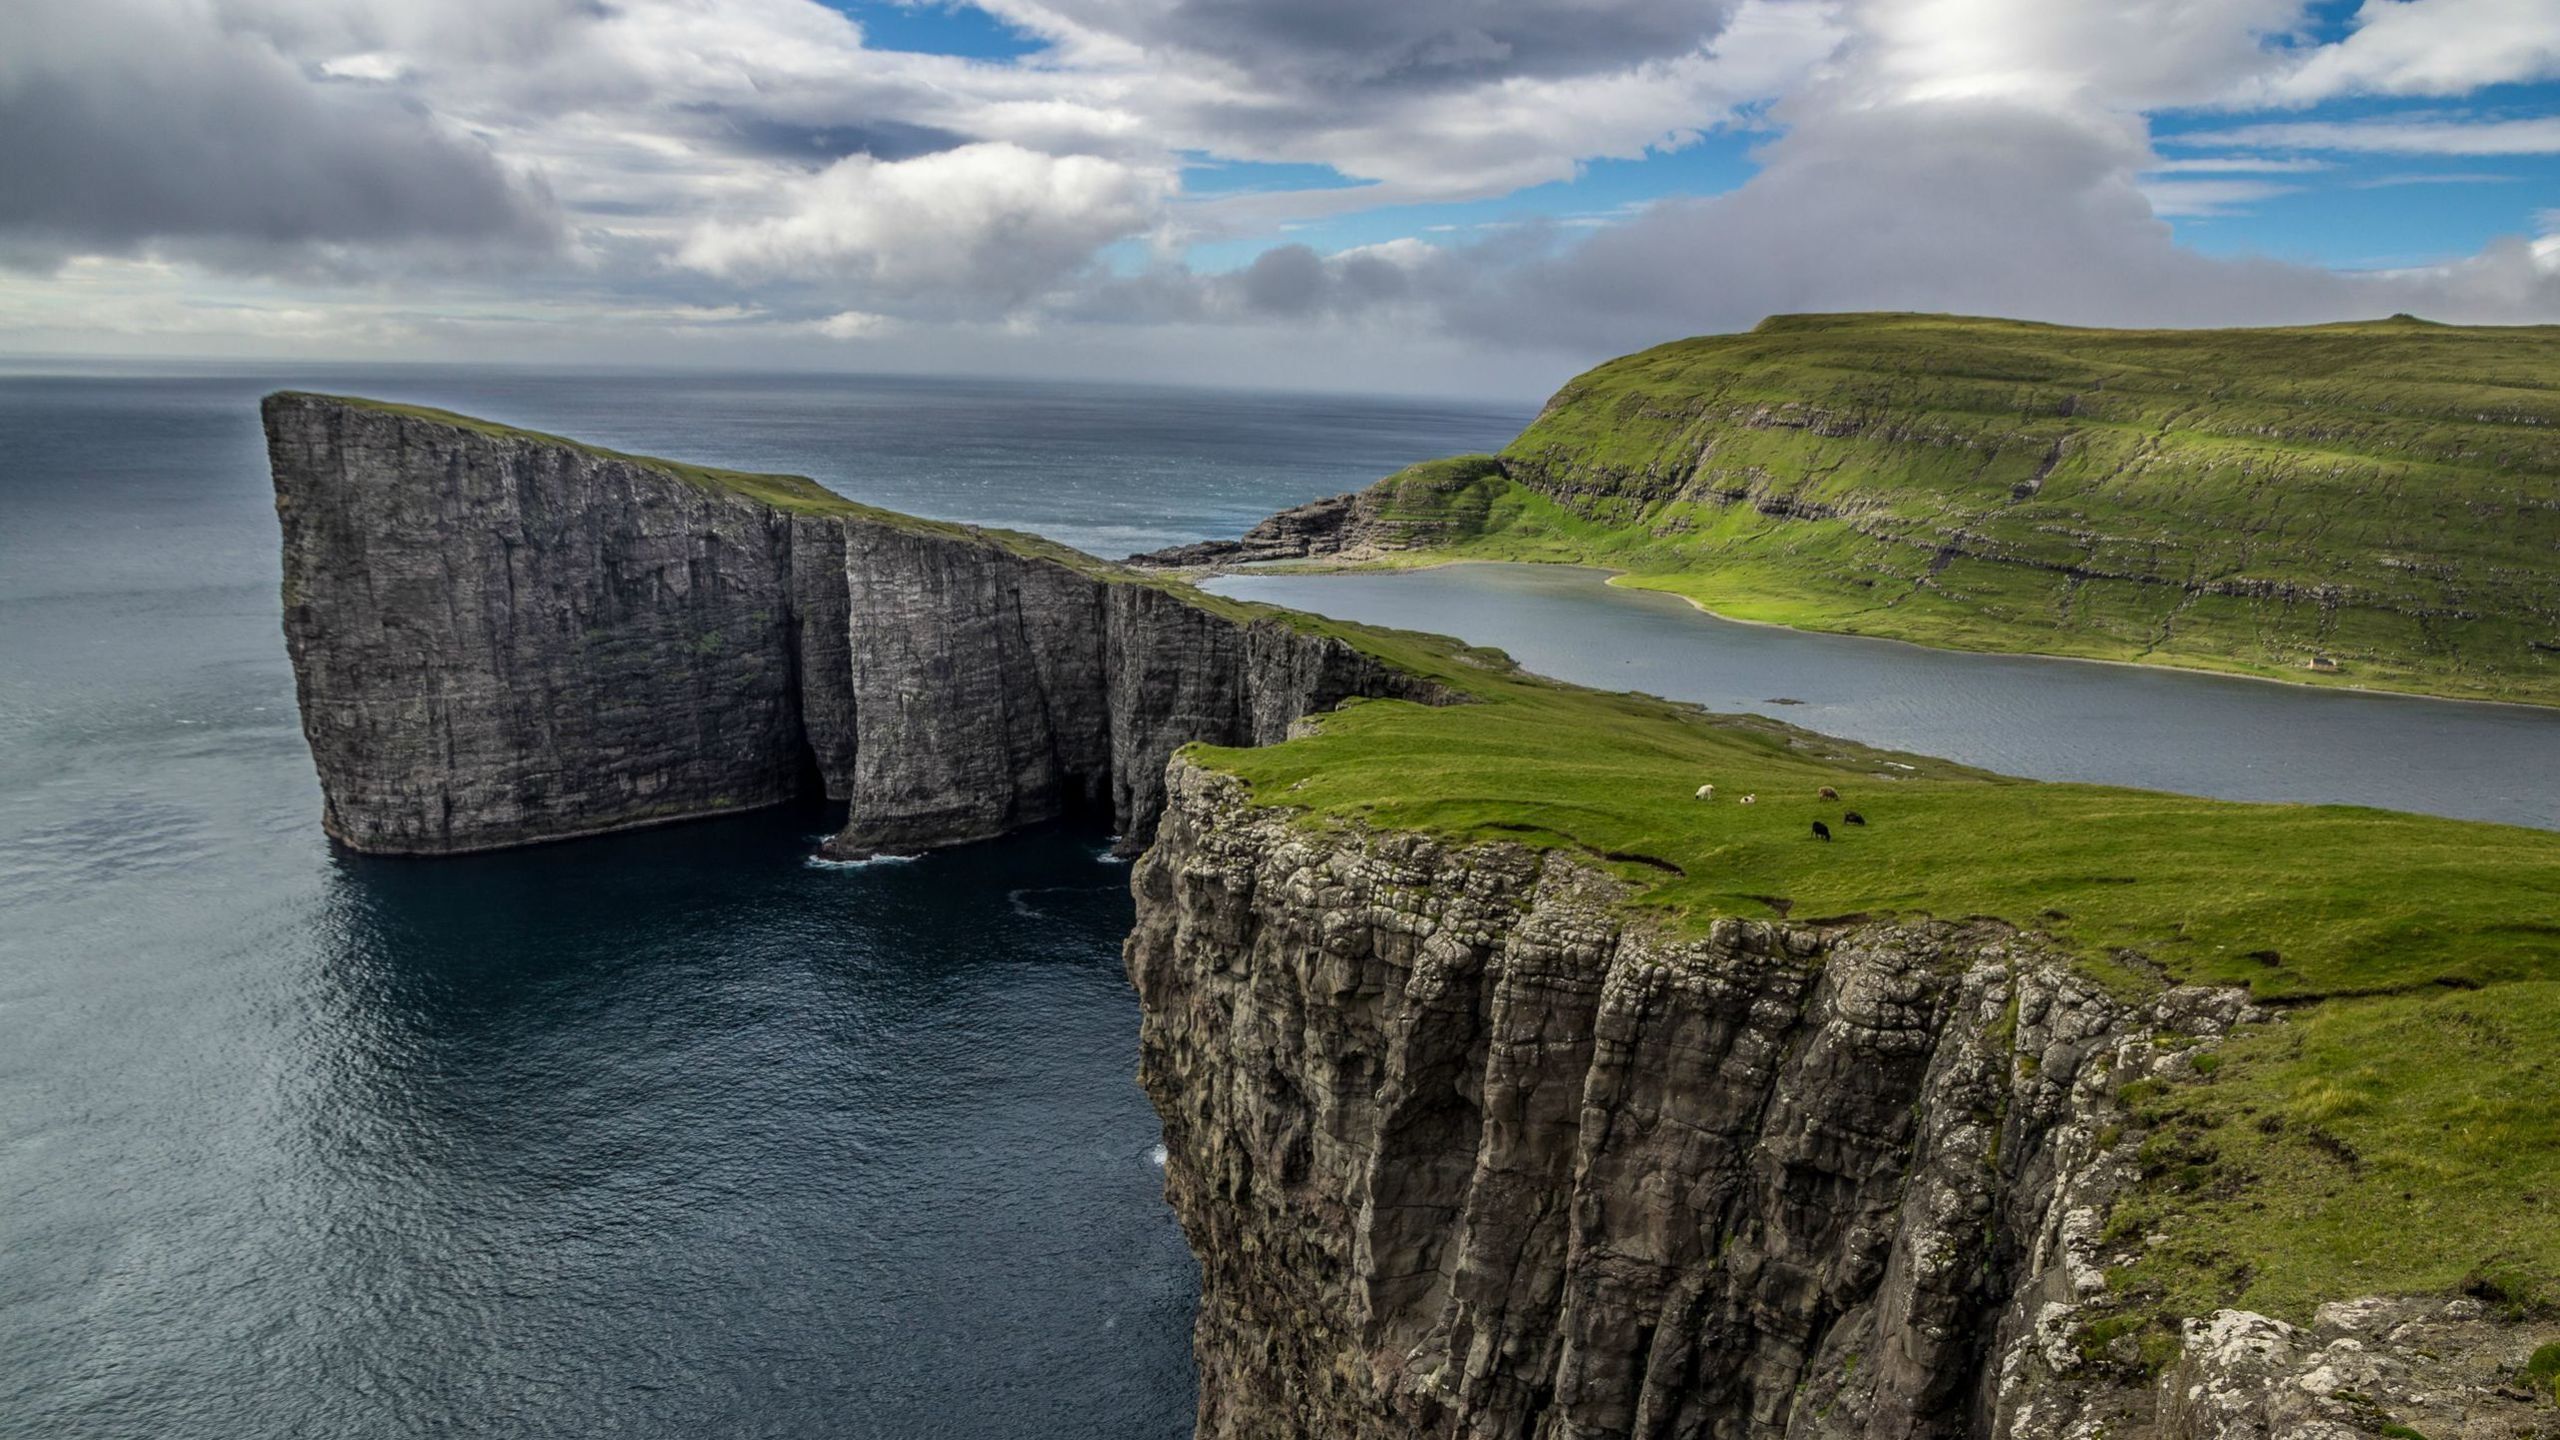 Faroe Islands Hd Wallpapers Wallpaper Cave